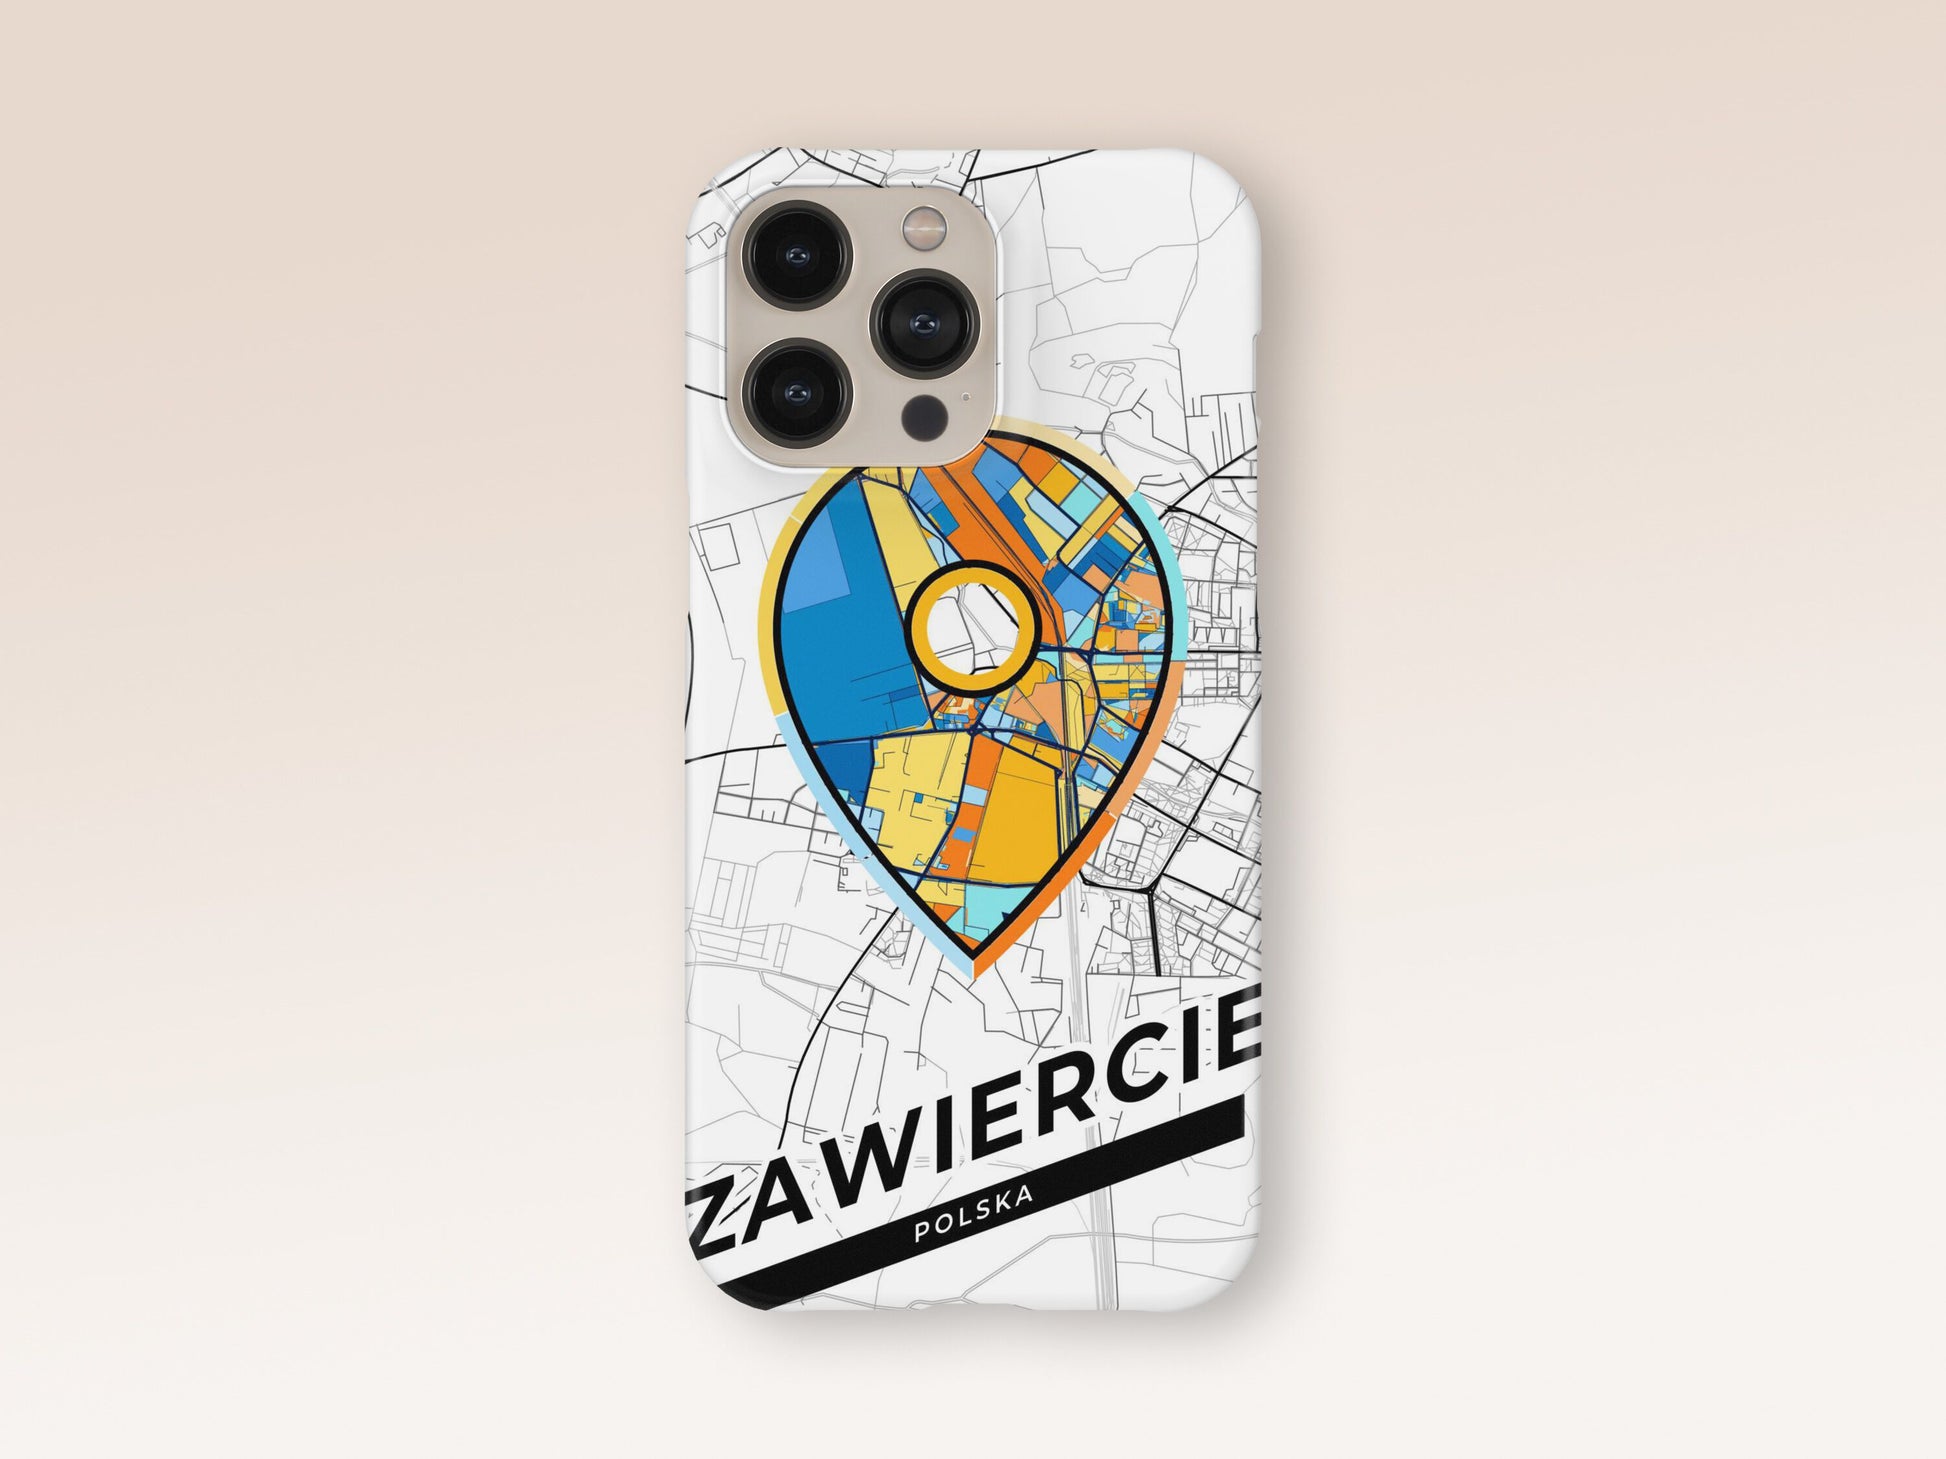 Zawiercie Poland slim phone case with colorful icon 1